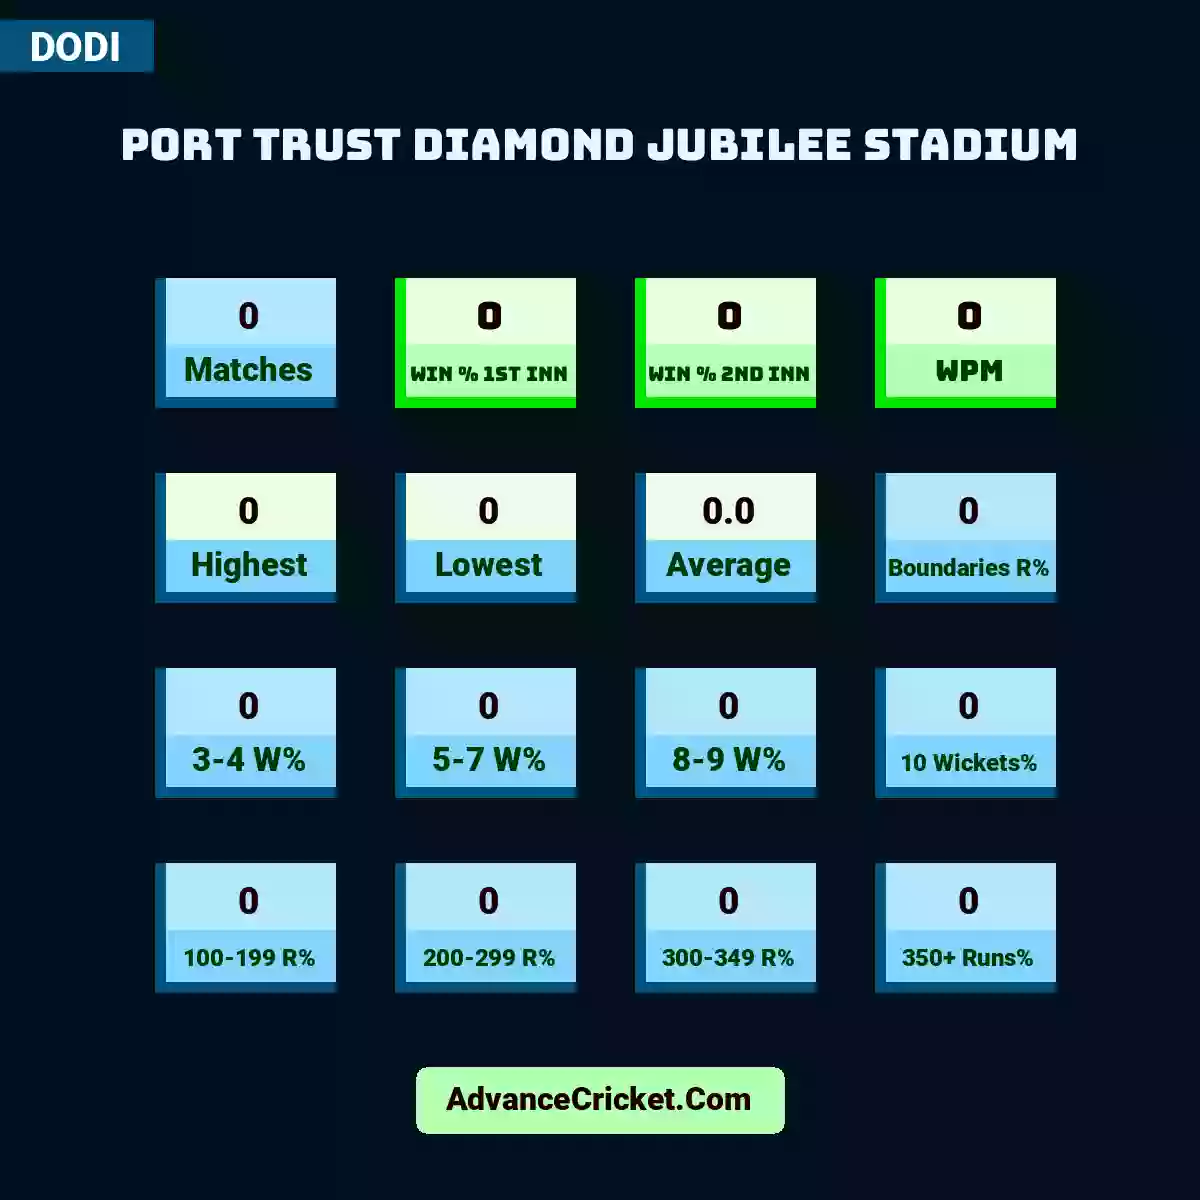 Image showing Port Trust Diamond Jubilee Stadium with Matches: 0, Win % 1st Inn: 0, Win % 2nd Inn: 0, WPM: 0, Highest: 0, Lowest: 0, Average: 0.0, Boundaries R%: 0, 3-4 W%: 0, 5-7 W%: 0, 8-9 W%: 0, 10 Wickets%: 0, 100-199 R%: 0, 200-299 R%: 0, 300-349 R%: 0, 350+ Runs%: 0.